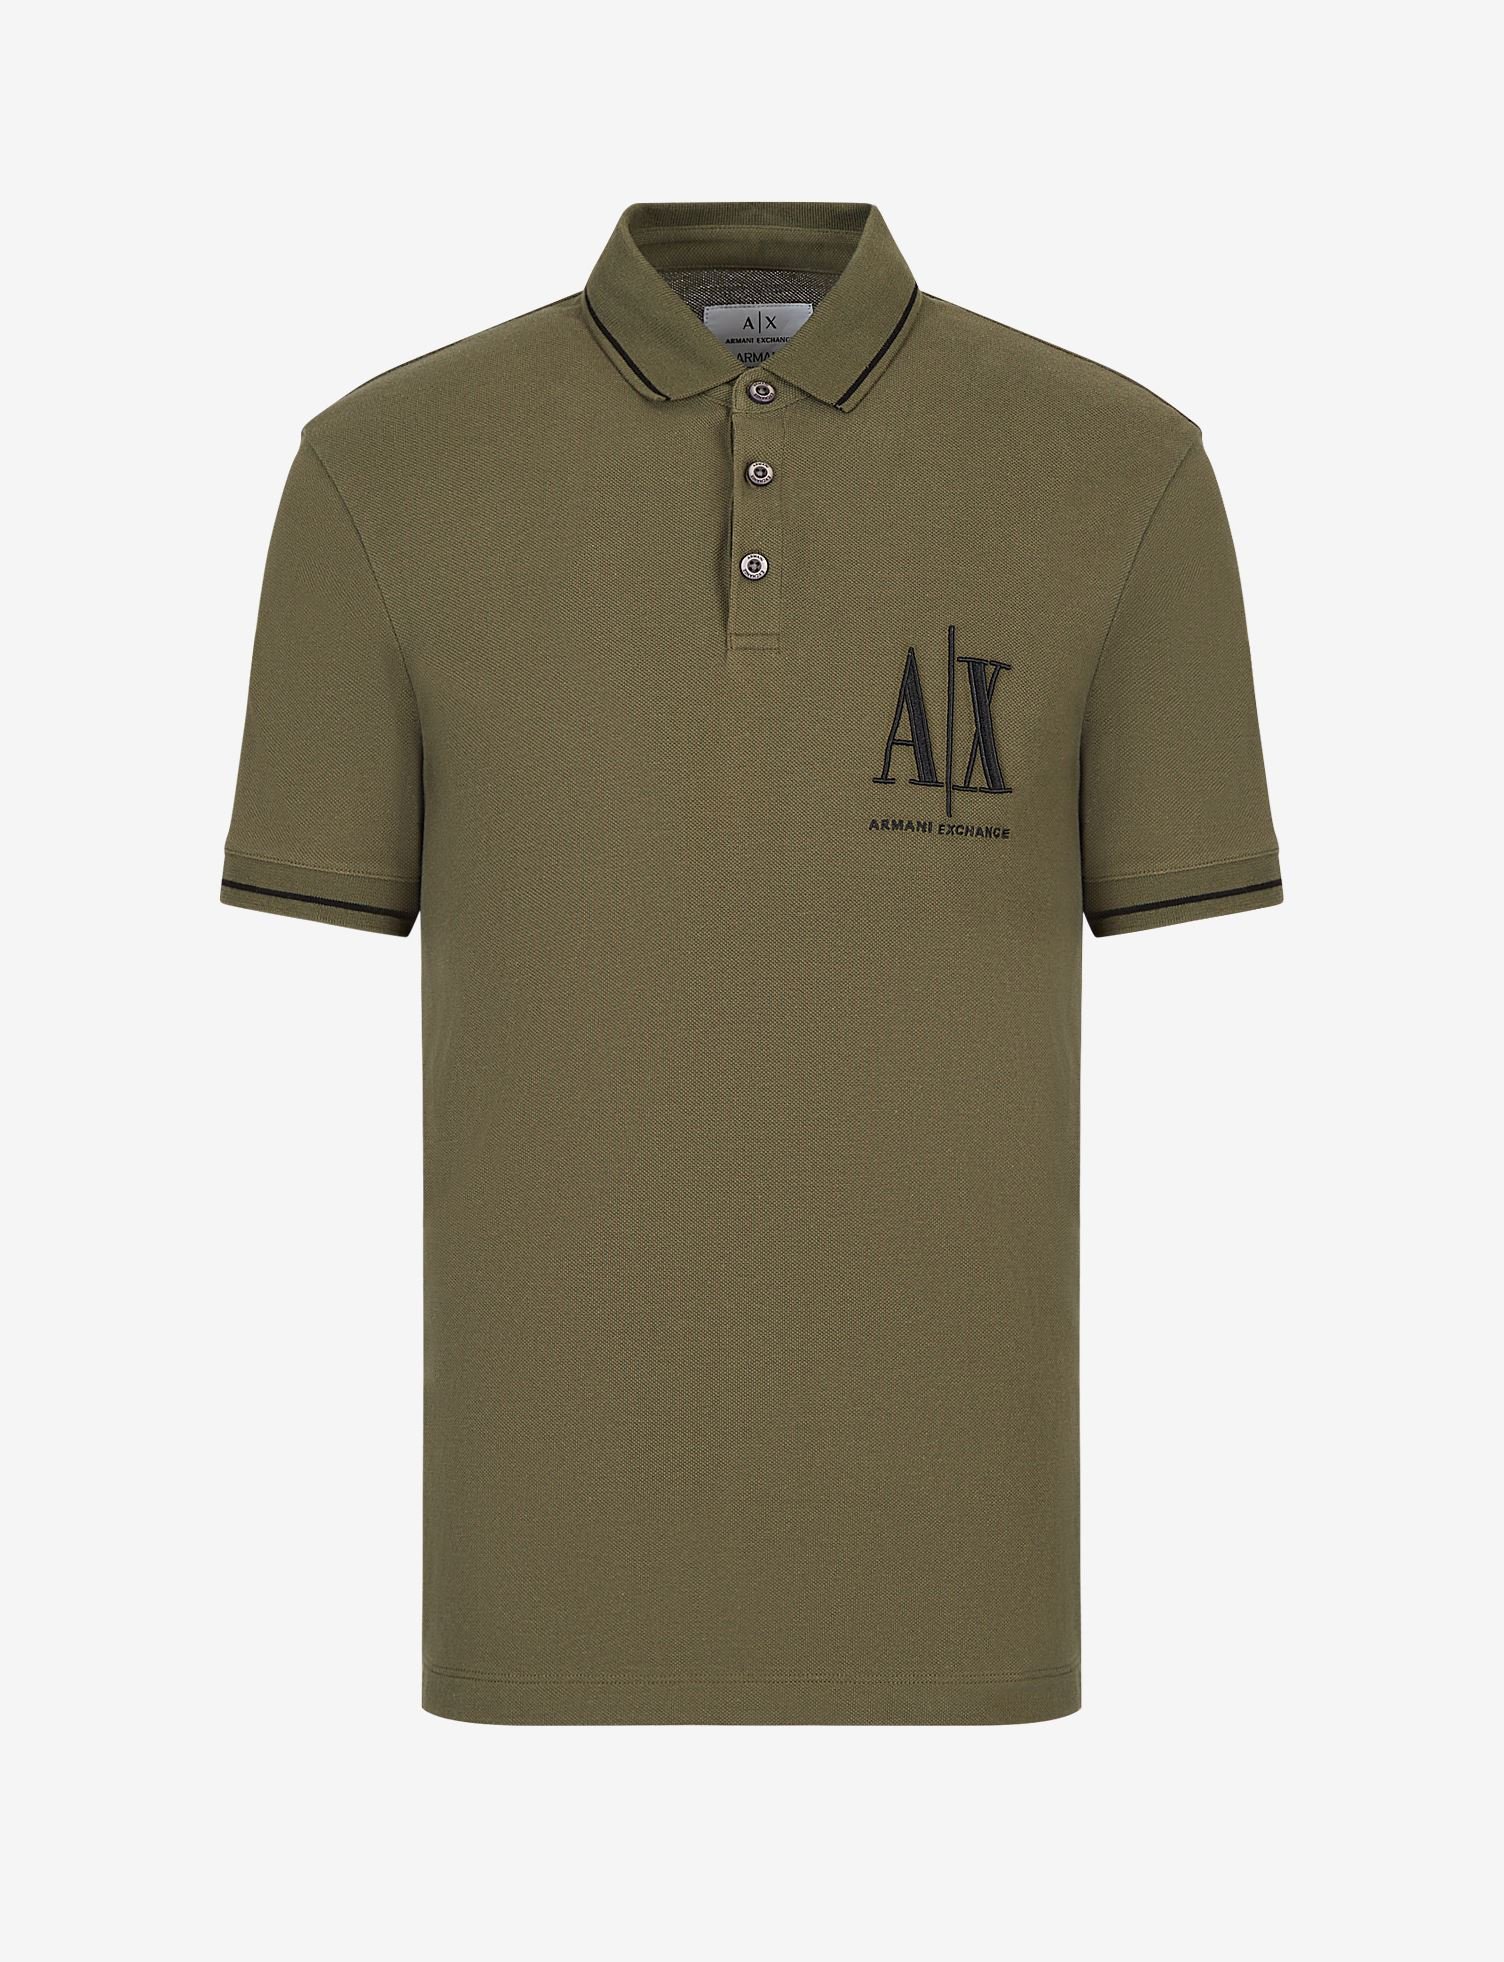 Armani Exchange_Icon Logo Cotton Pique Polo Shirt_5950_4760.jpg